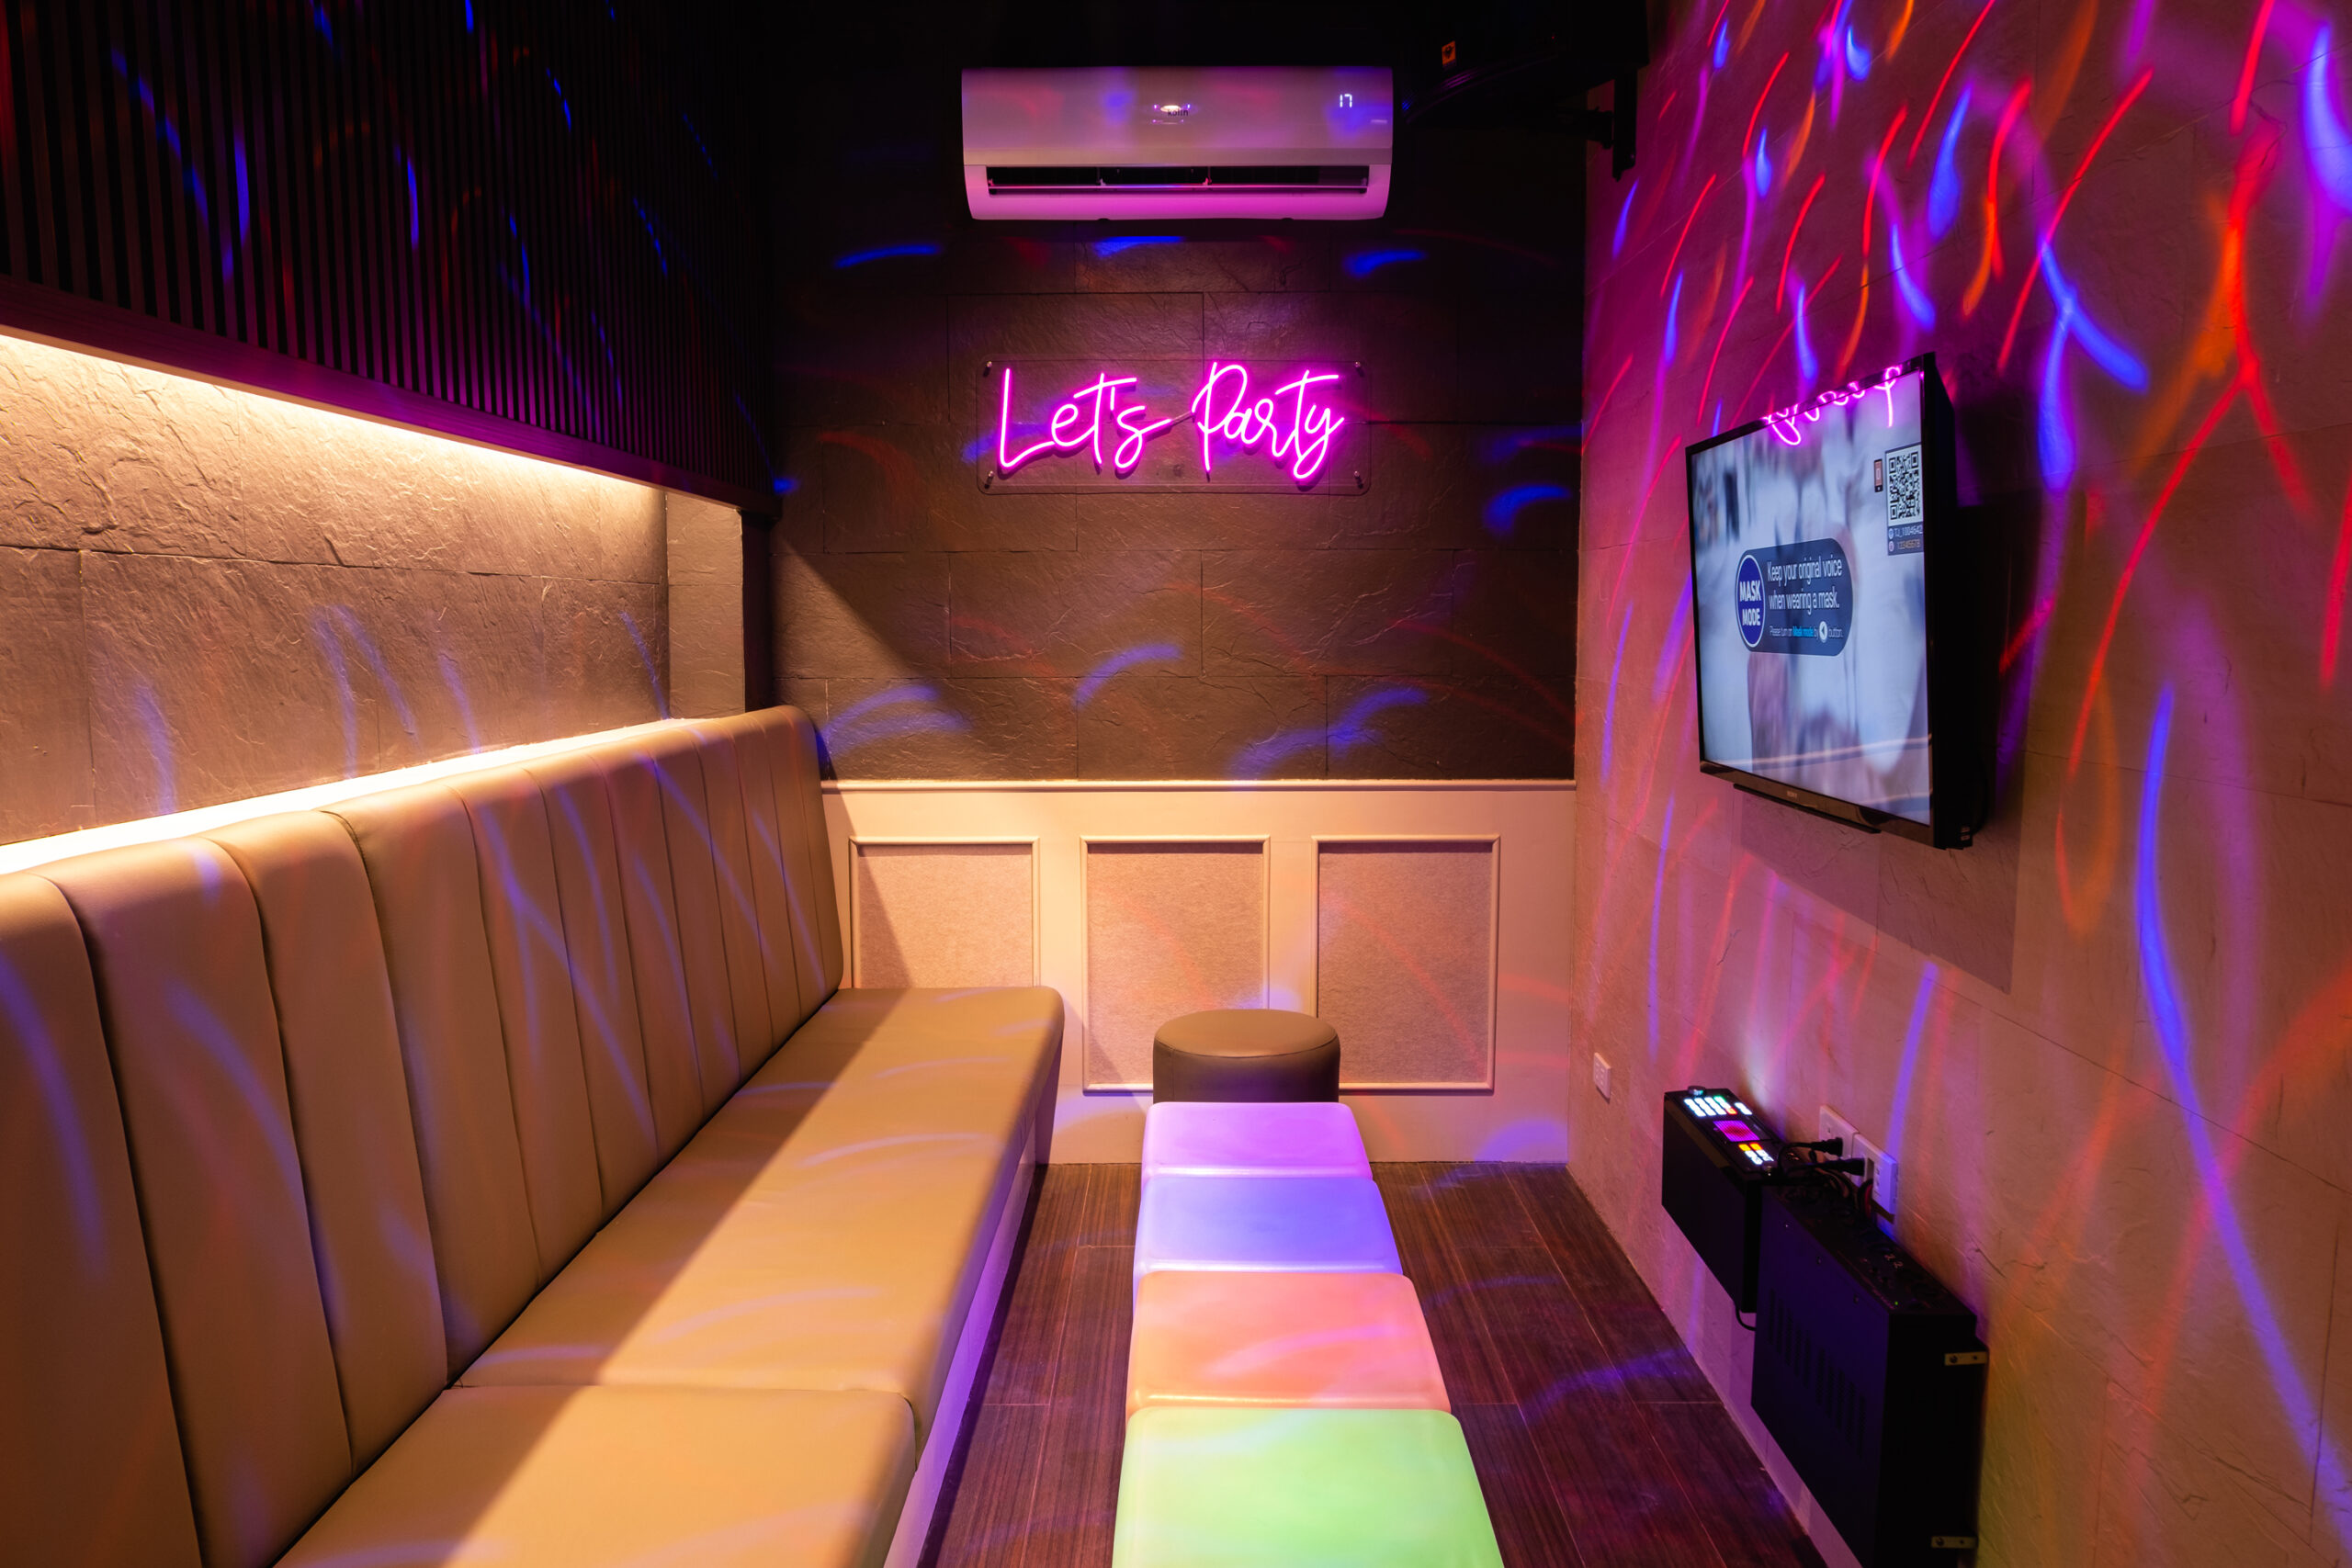 Mini karaoke rooms rise above closed larger venues - VnExpress